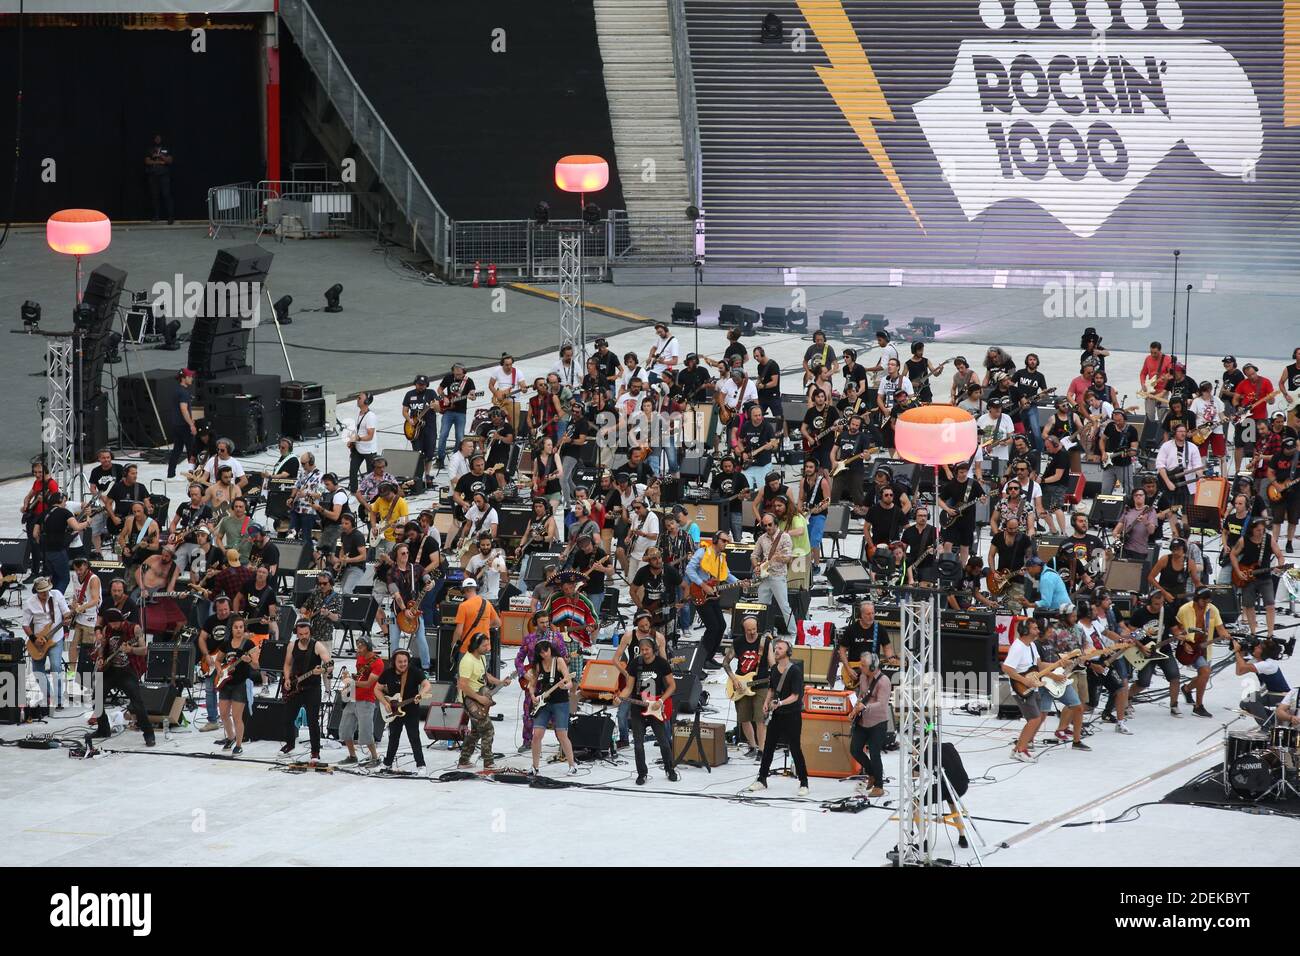 Ambiance lors du concert Rockin' 1000 au Stade de France a St-Denis,  France, le 29 juin 2019. Photo by Jerome Domine/ABACAPRESS.COM Stock Photo  - Alamy